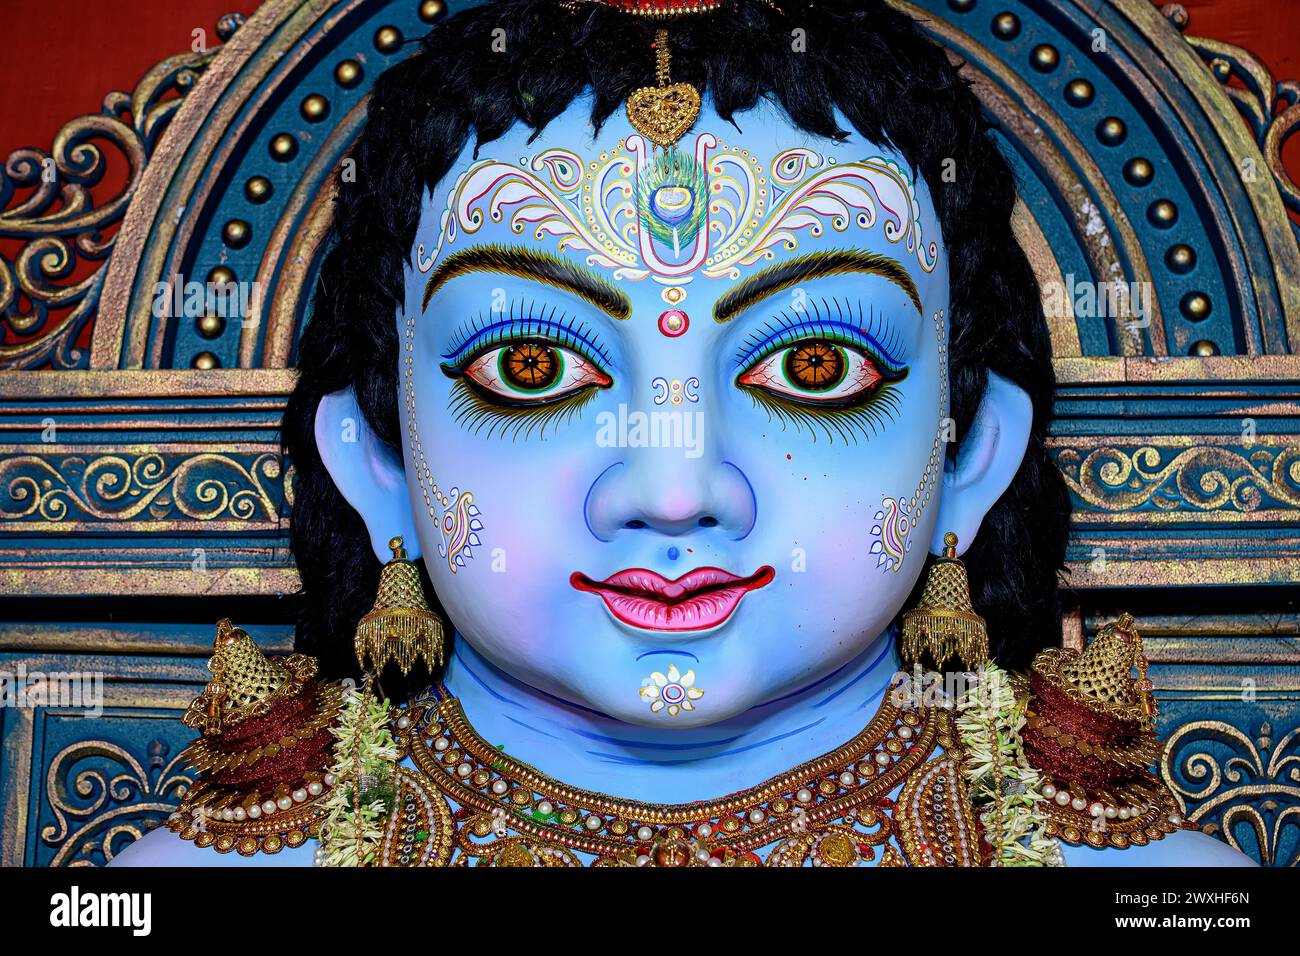 Idol of Goddess Laddu Gopal or little Lord Krishna at a decorated puja pandal in Kolkata, West Bengal, India. Stock Photo